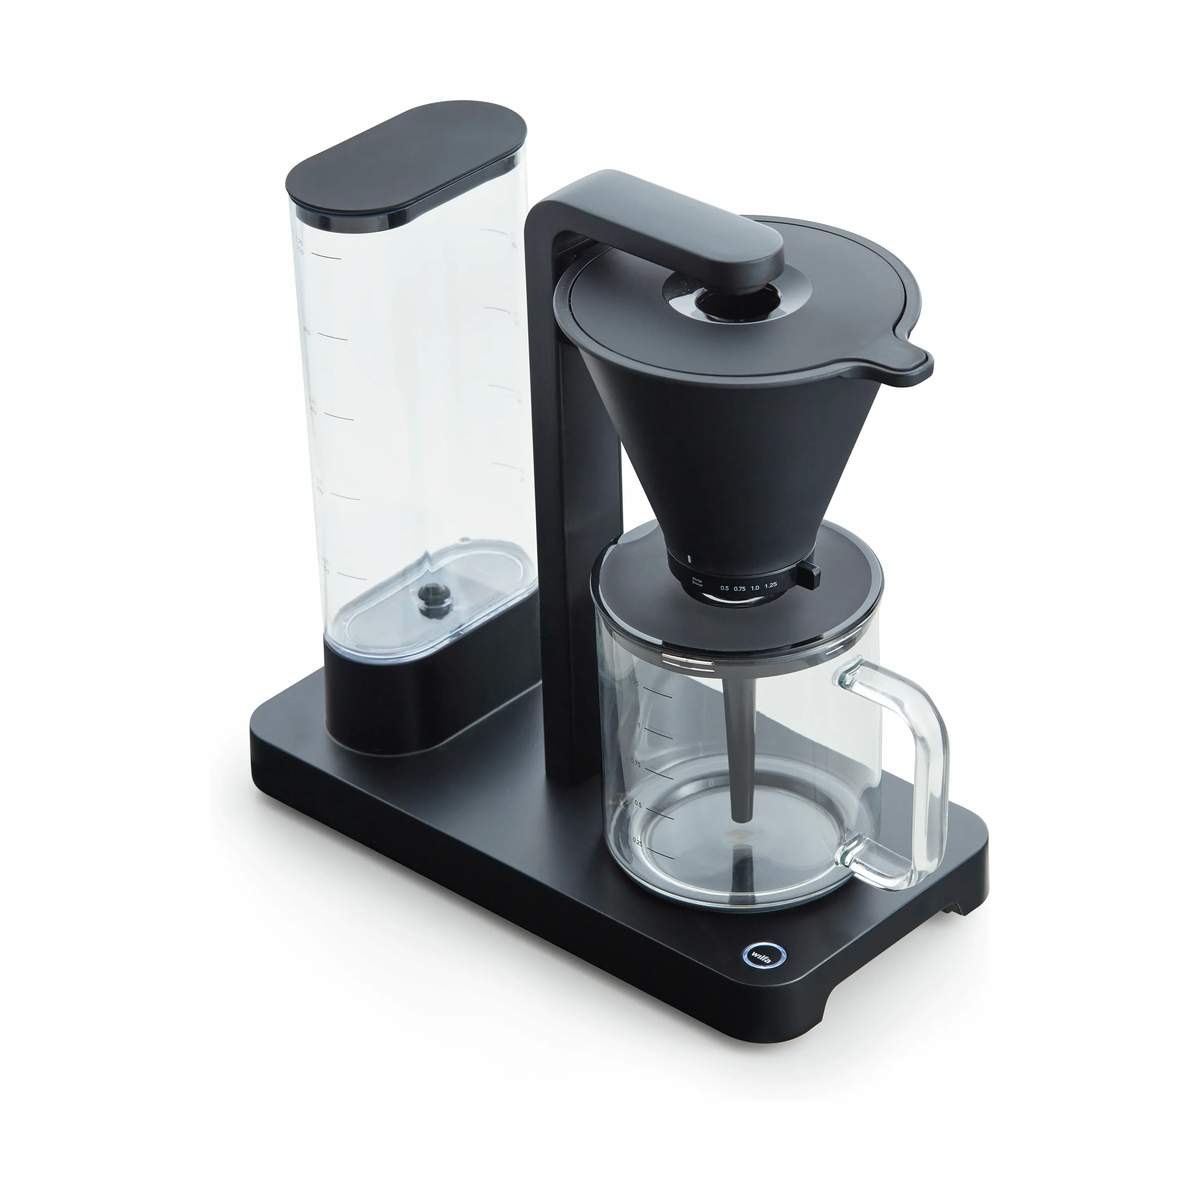 Perioperativ periode renhed Royal familie Wilfa - Svart Performance kaffemaskine - 1,25 liter - Bryggetid: 6-8 min. -  Aromakontrol | Imerco